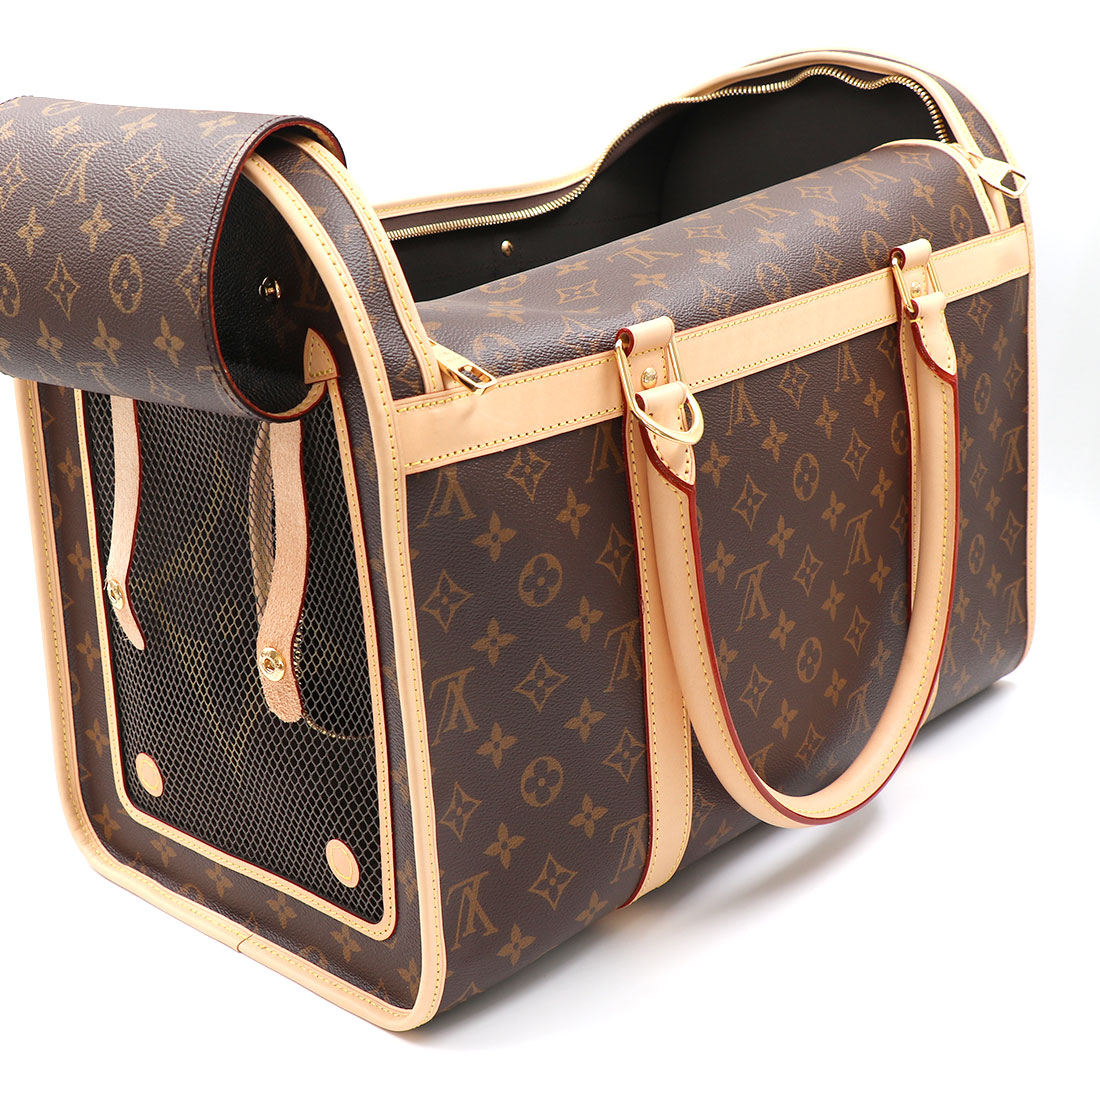 Shop Louis Vuitton Dog bag (M45662) by 碧aoi